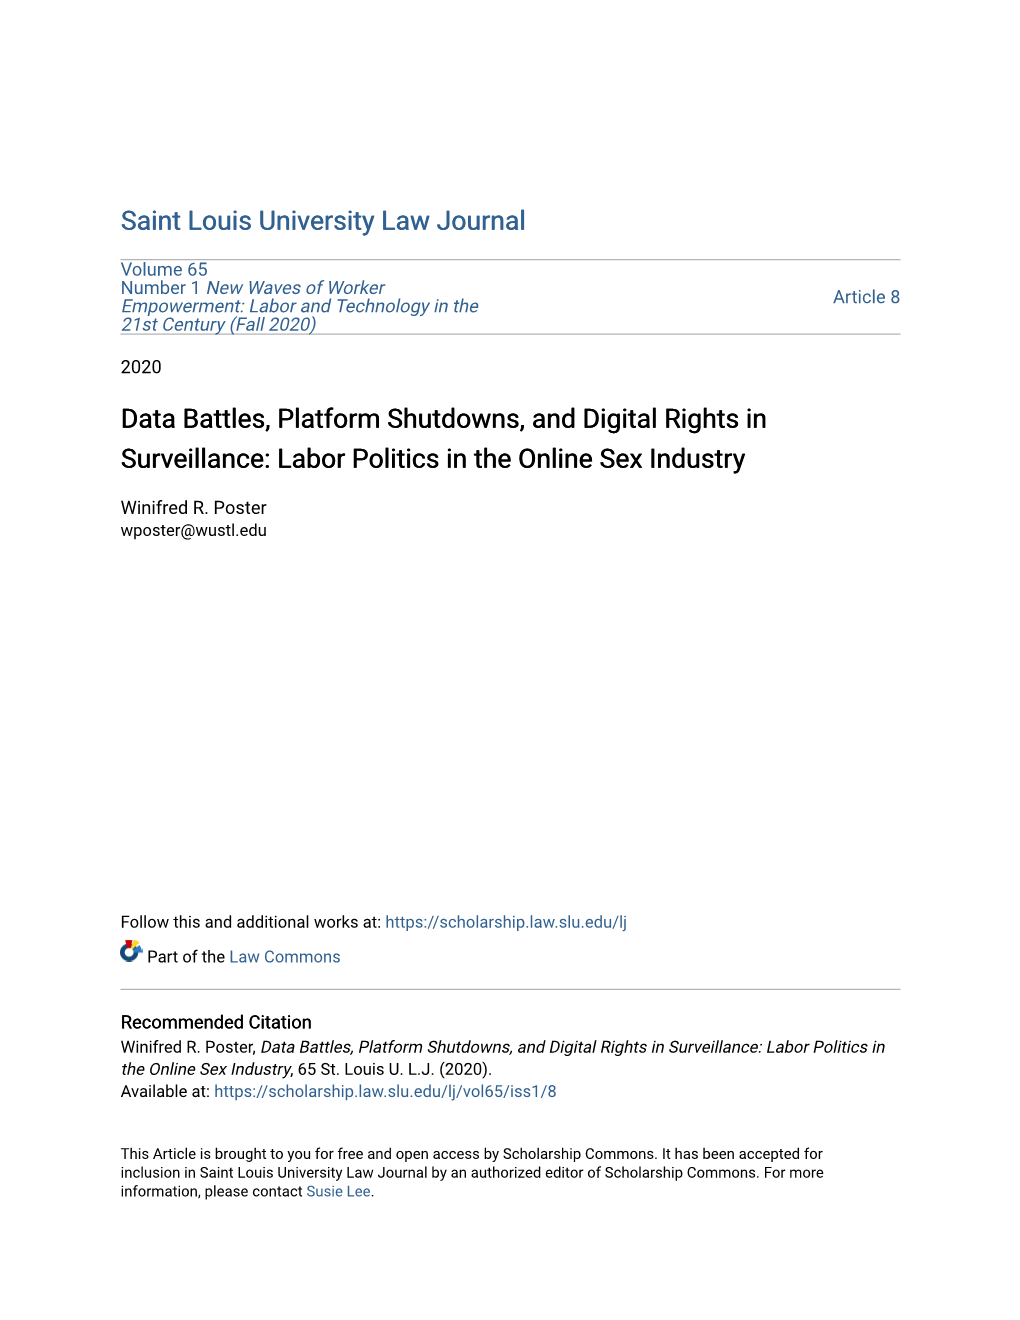 Data Battles, Platform Shutdowns, and Digital Rights in Surveillance: Labor Politics in the Online Sex Industry